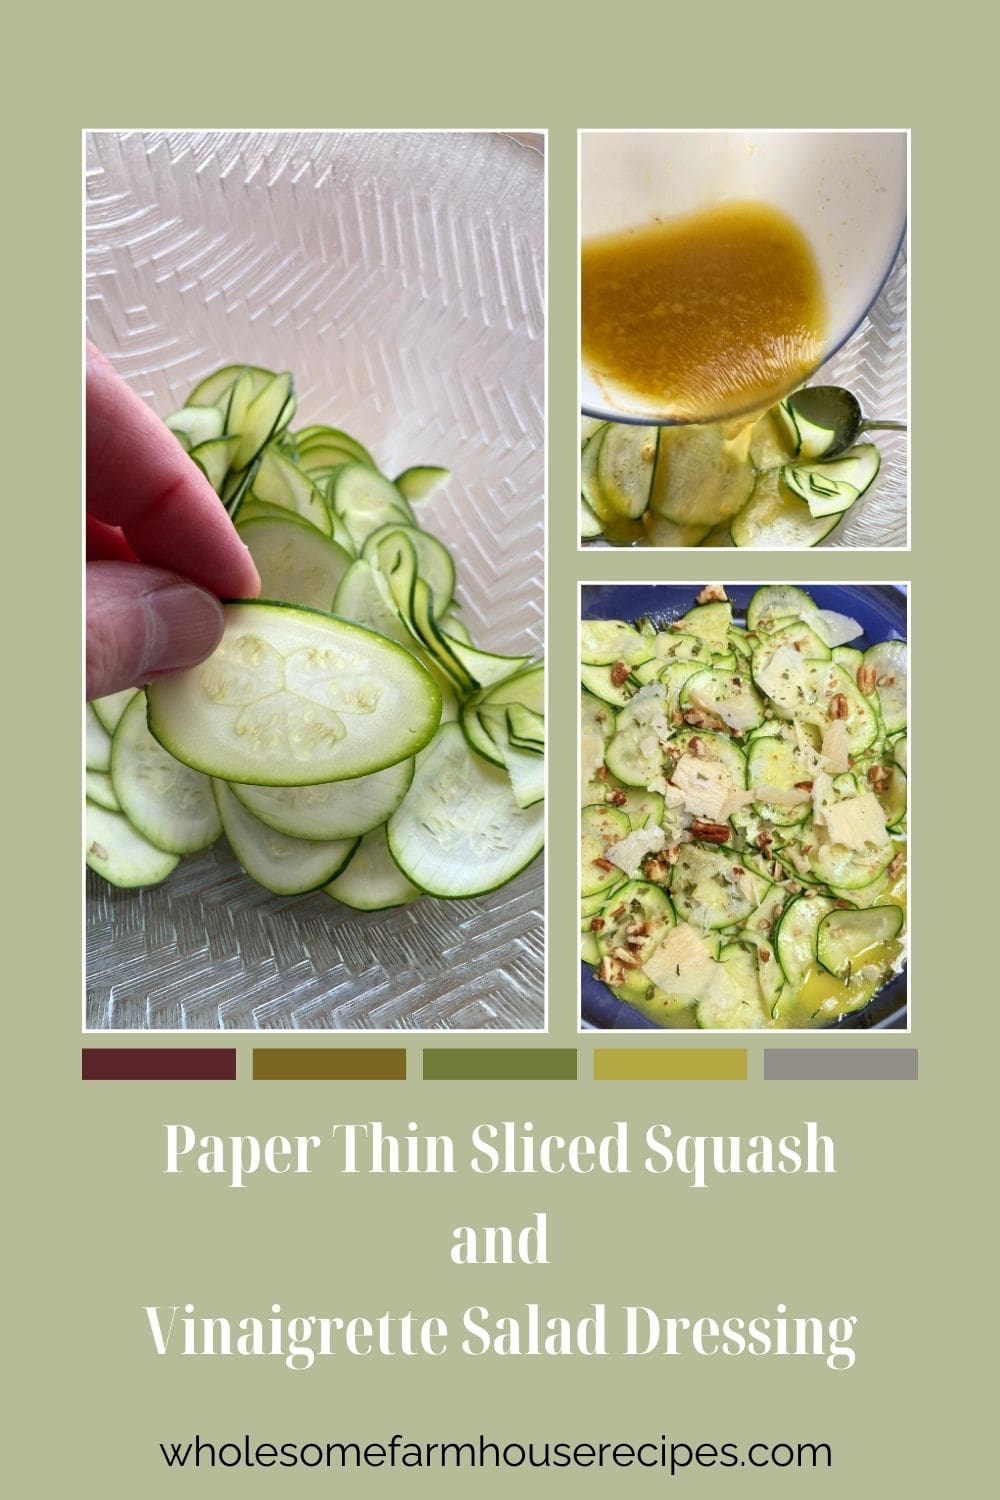 Paper Thin Sliced Squash and Vinaigrette Salad Dressing